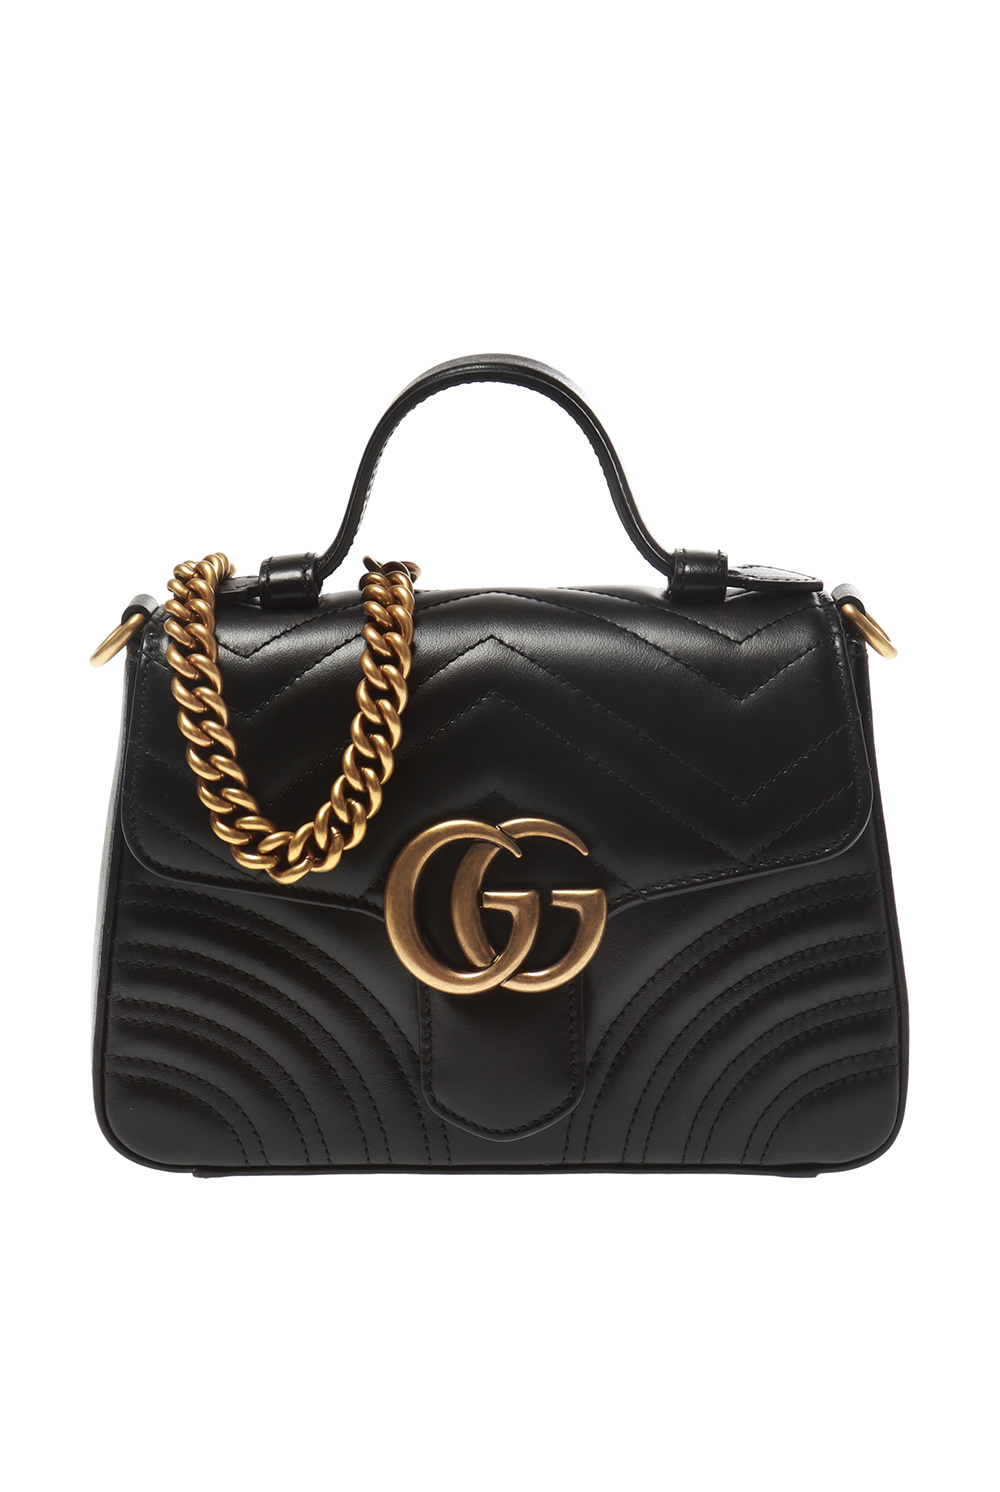 Gucci GG Marmont Medium Top Handle Shoulder Bag in Black